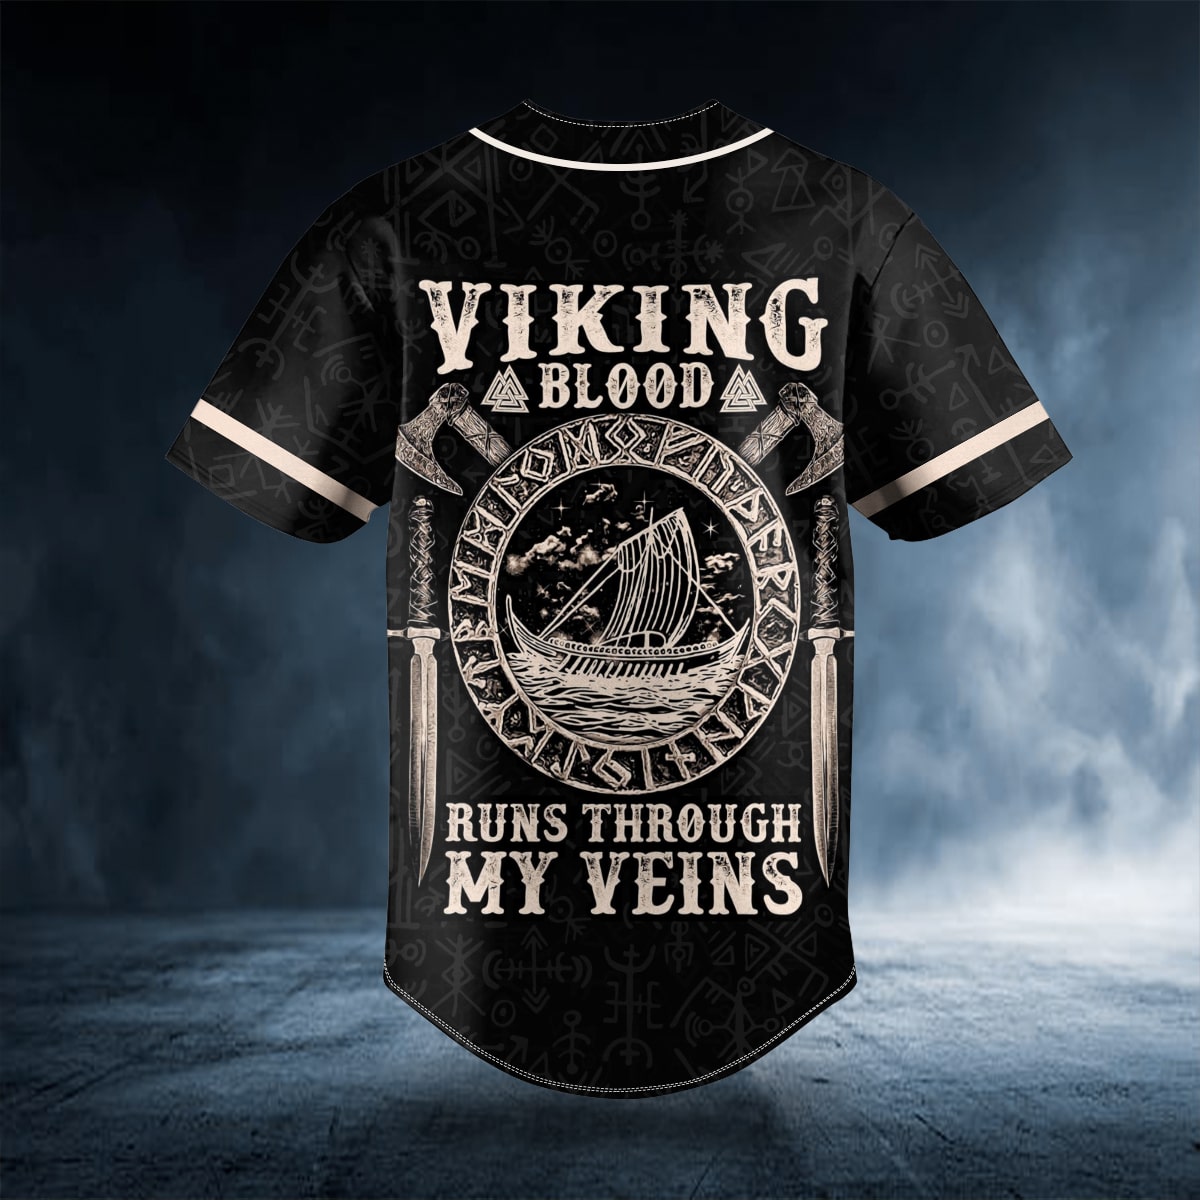 viking blood runs through my veins custom baseball jersey bsj 859 xri4x